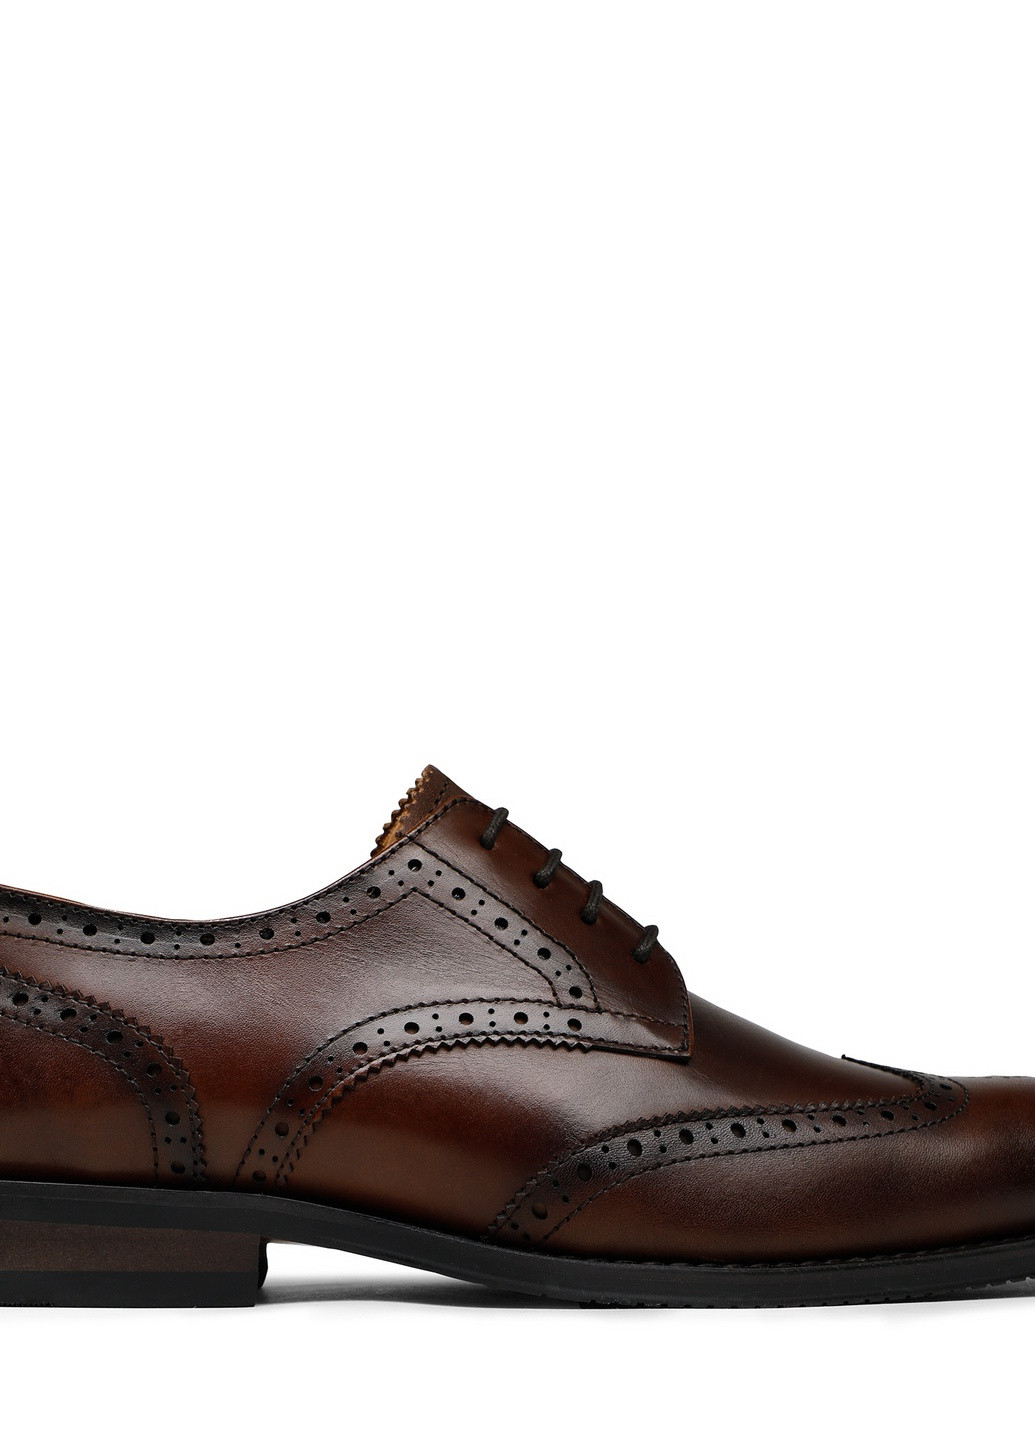 Темно-коричневые осенние туфли fabiano-01 122am Gino Rossi